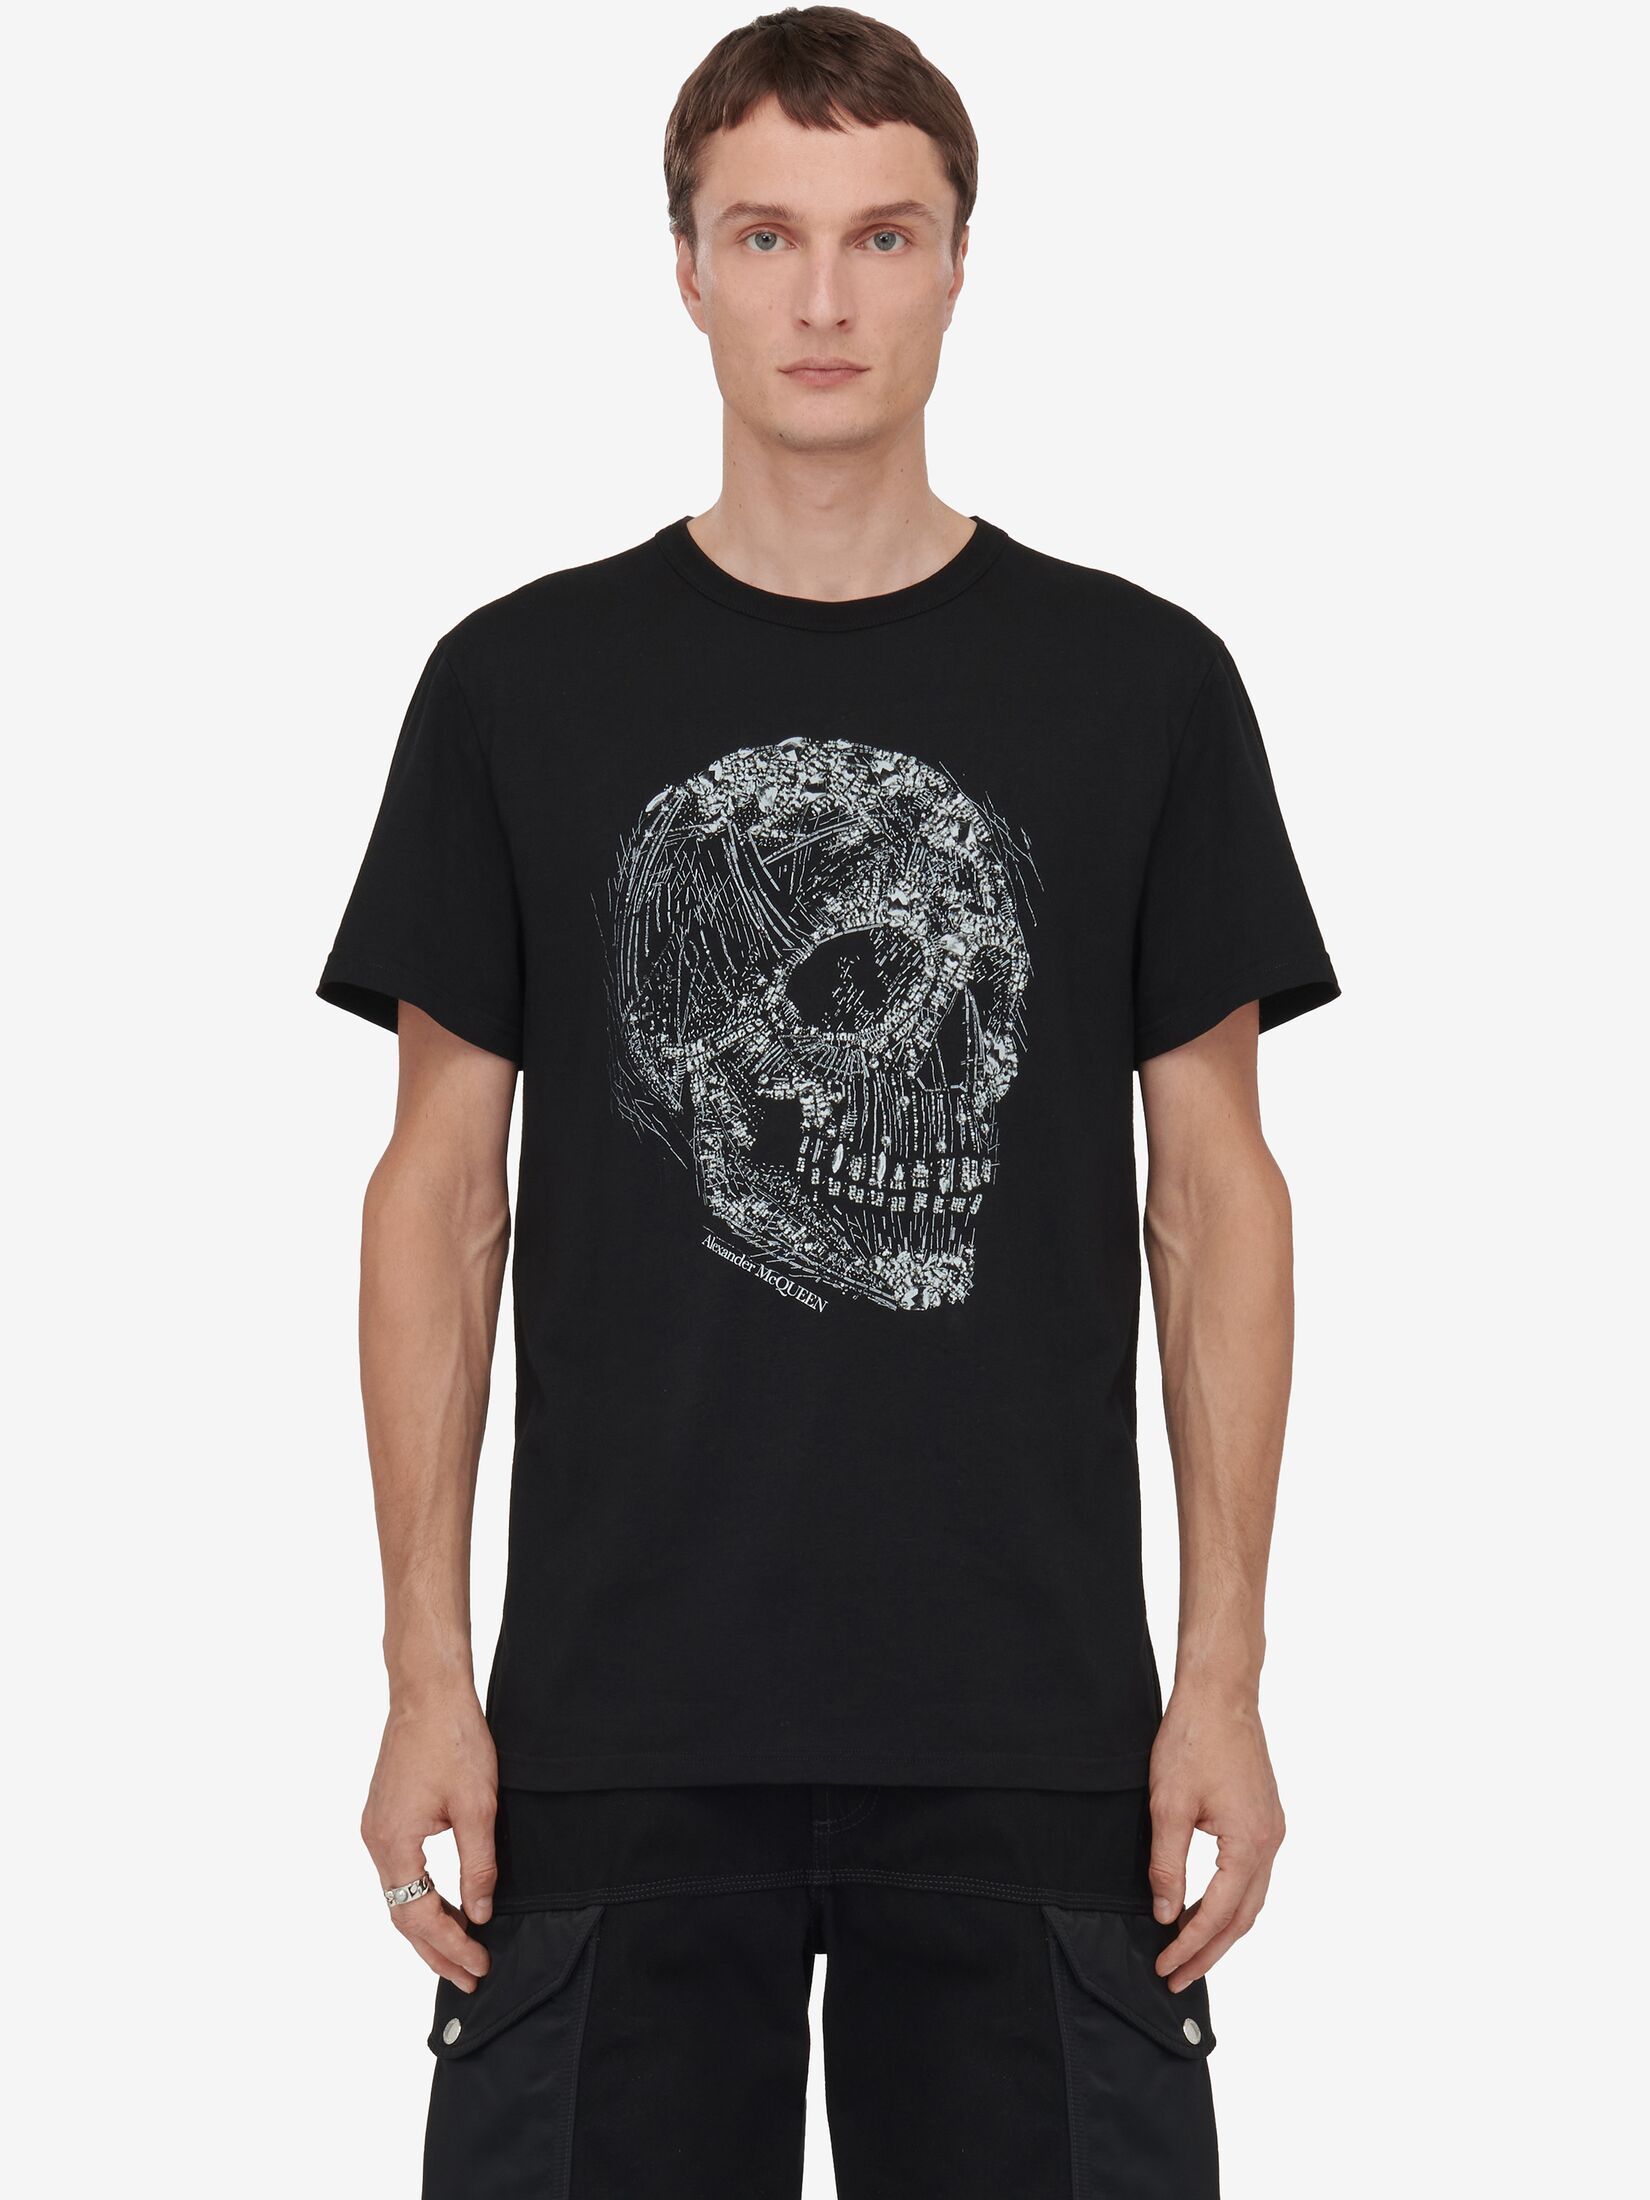 Crystal Skull T-shirt in Black/White | Alexander McQueen US